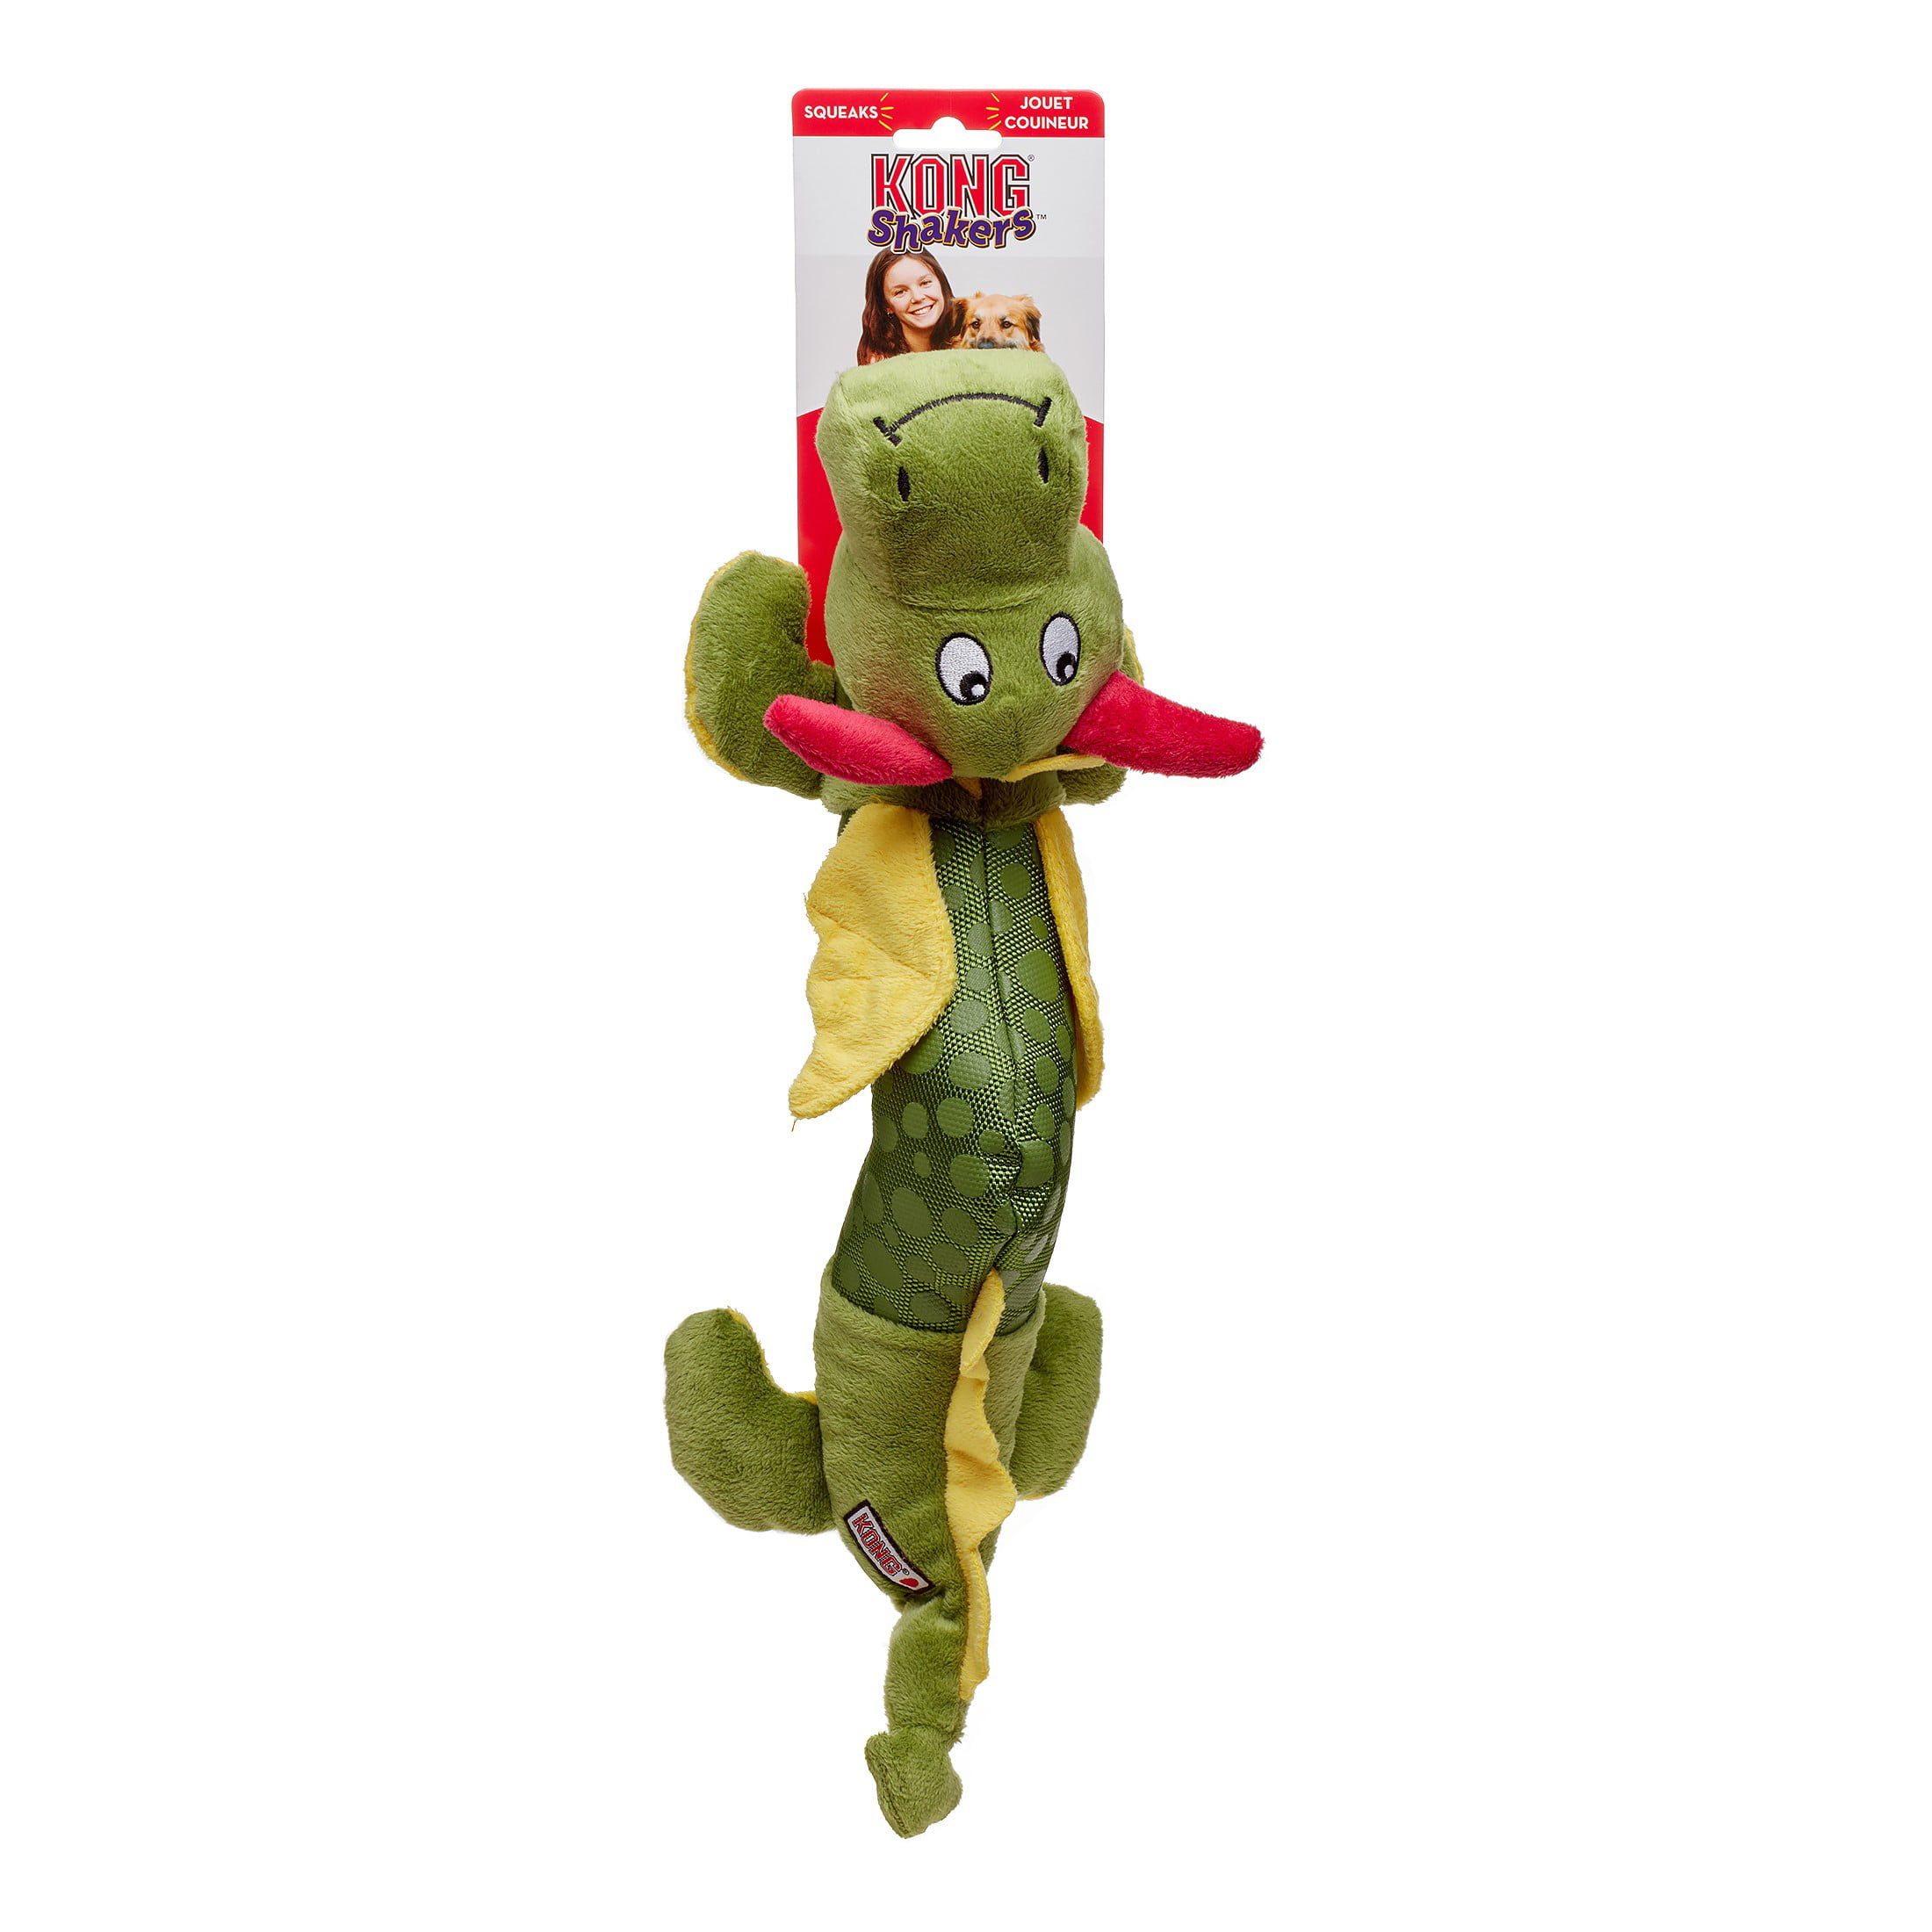 KONG Shakers Stuffed Dragon Dog Toy 